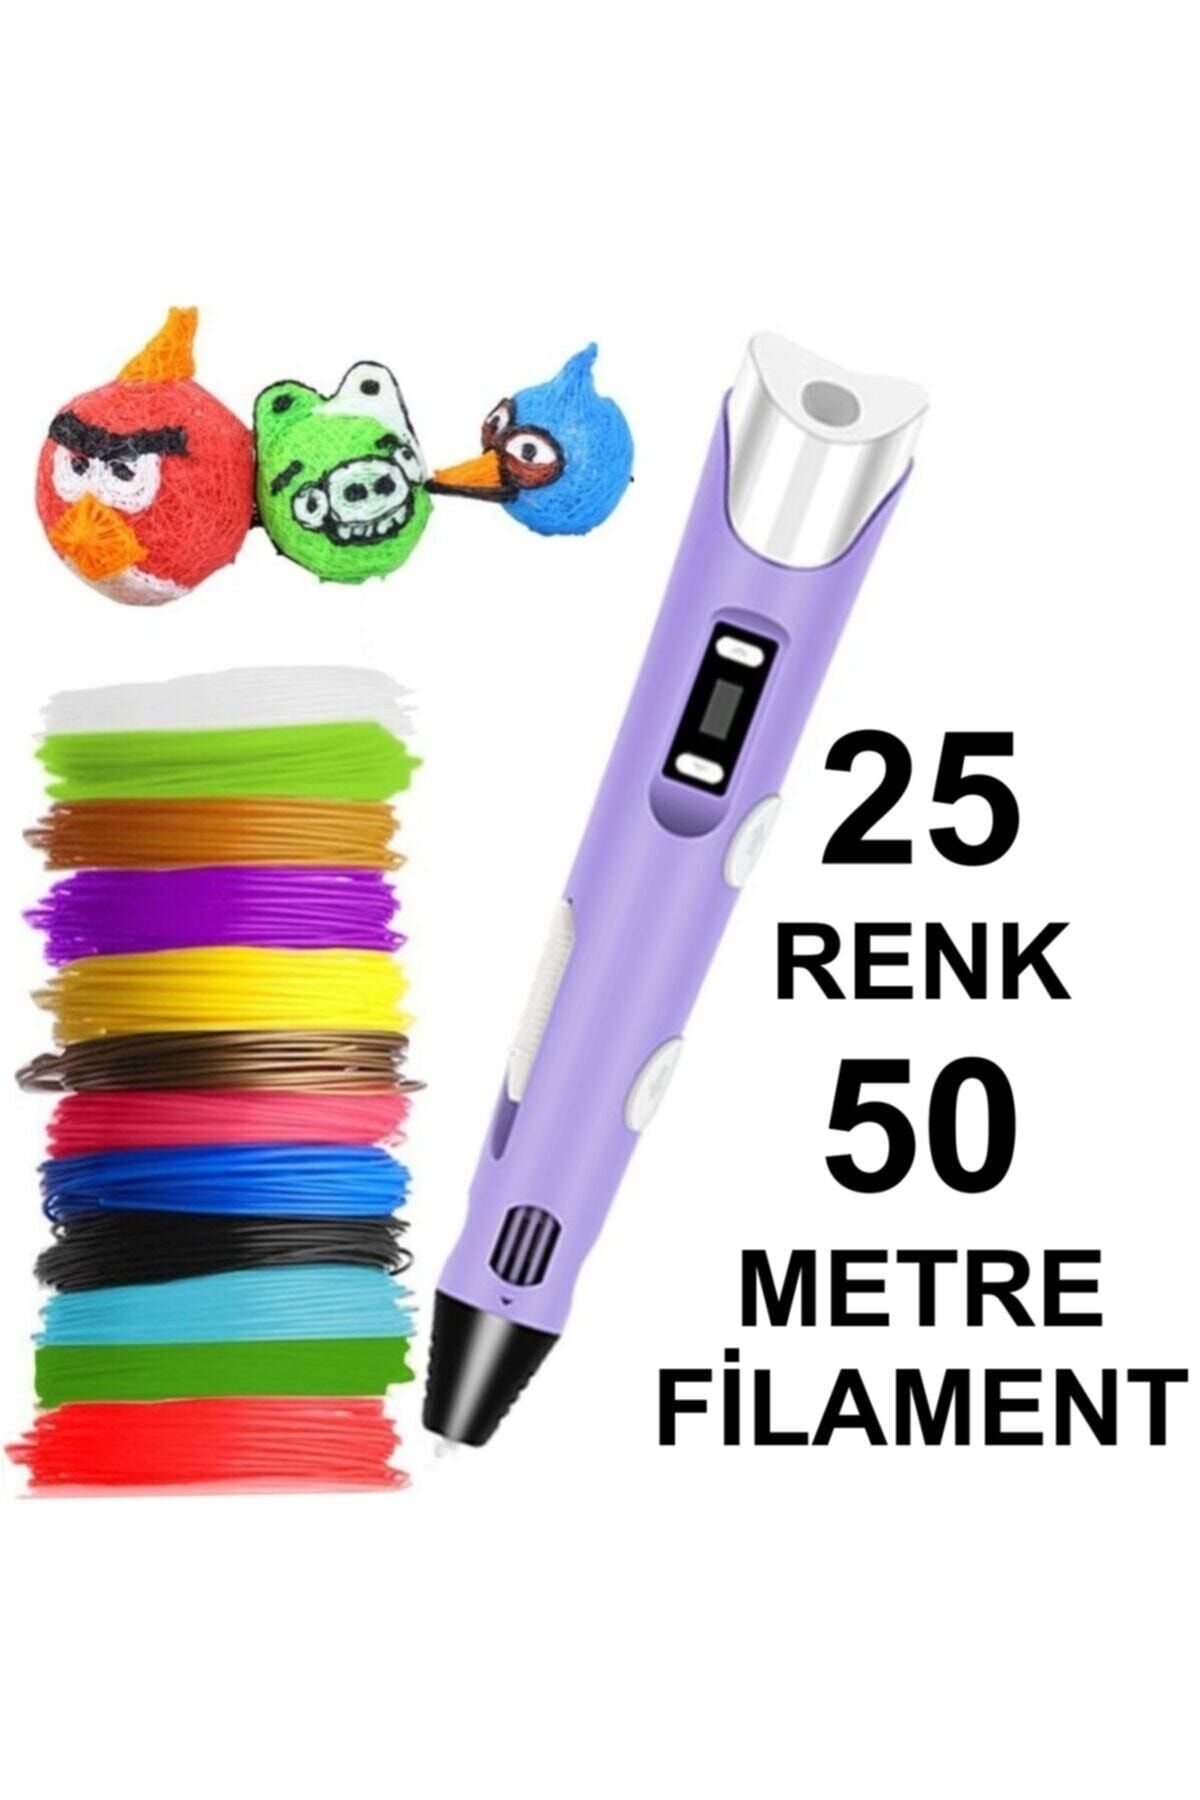 3D Mor Kalem Yazıcı+25 Renk 50 Metre (25x2metre) Pla Filament